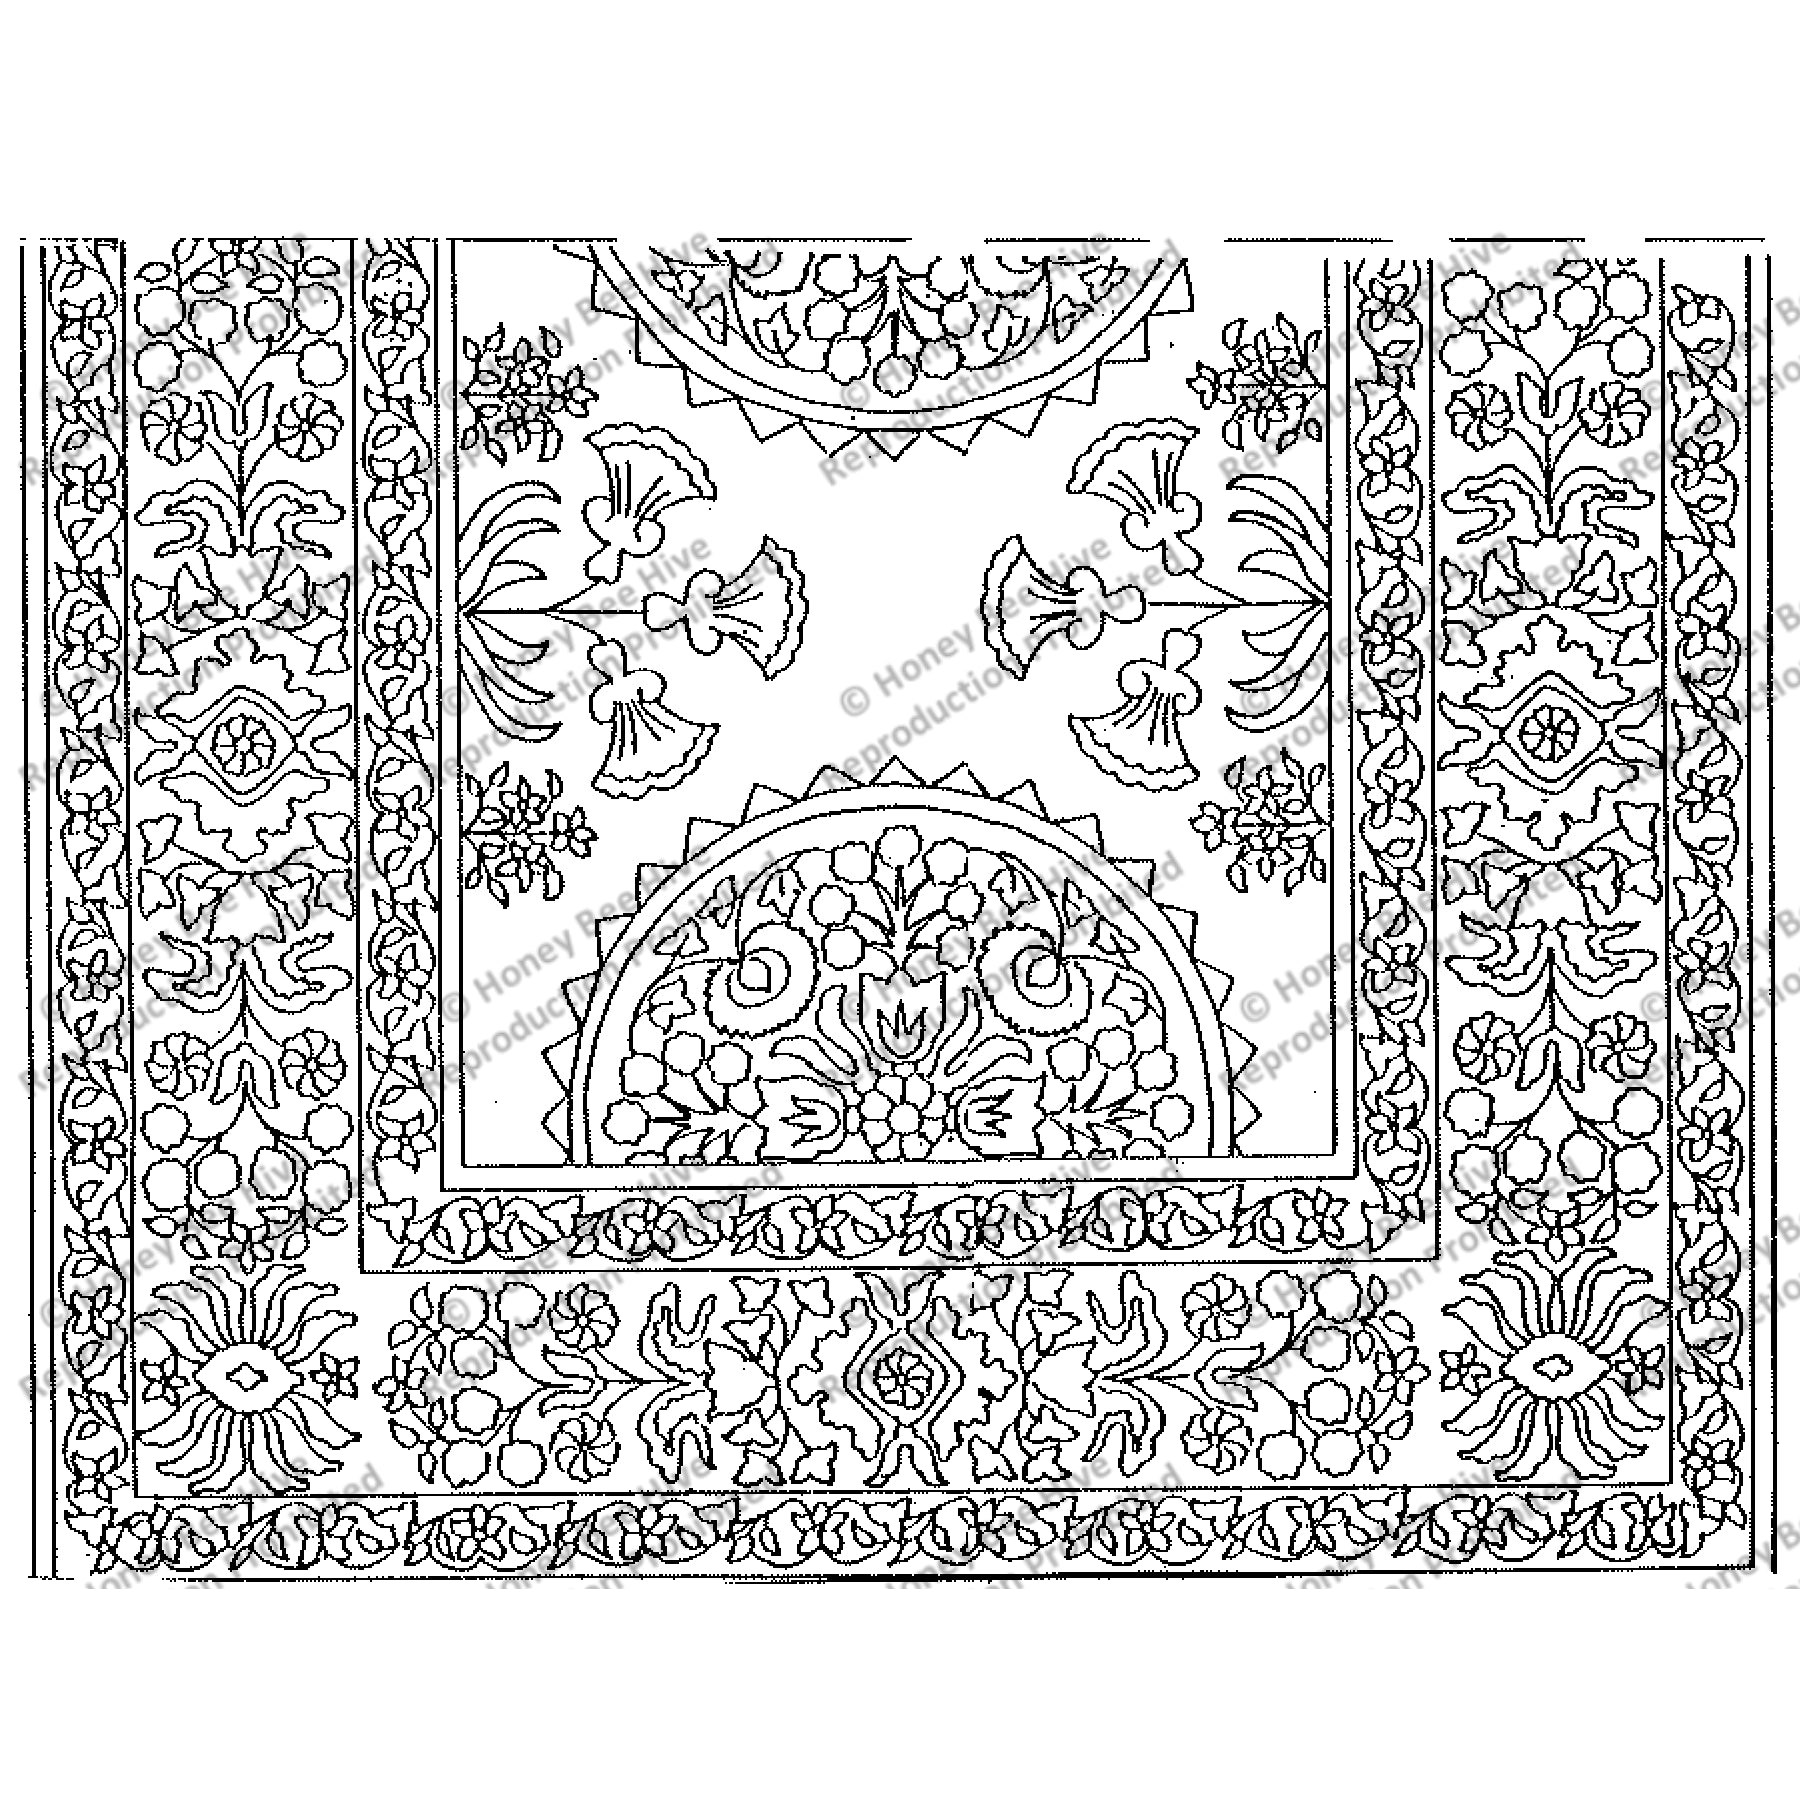 Silkin Sunburst, rug hooking pattern